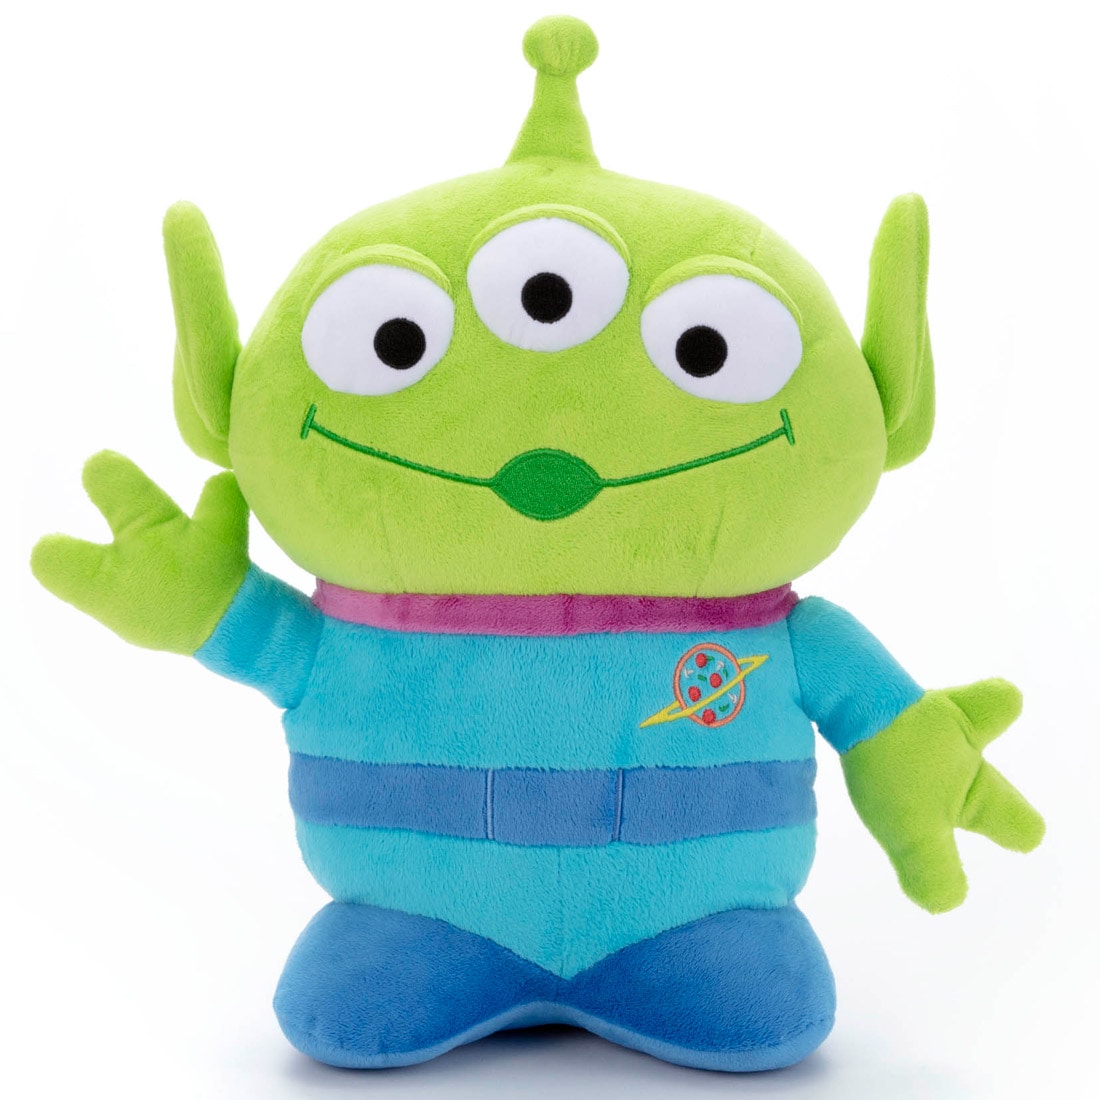 toy story 4 alien plush